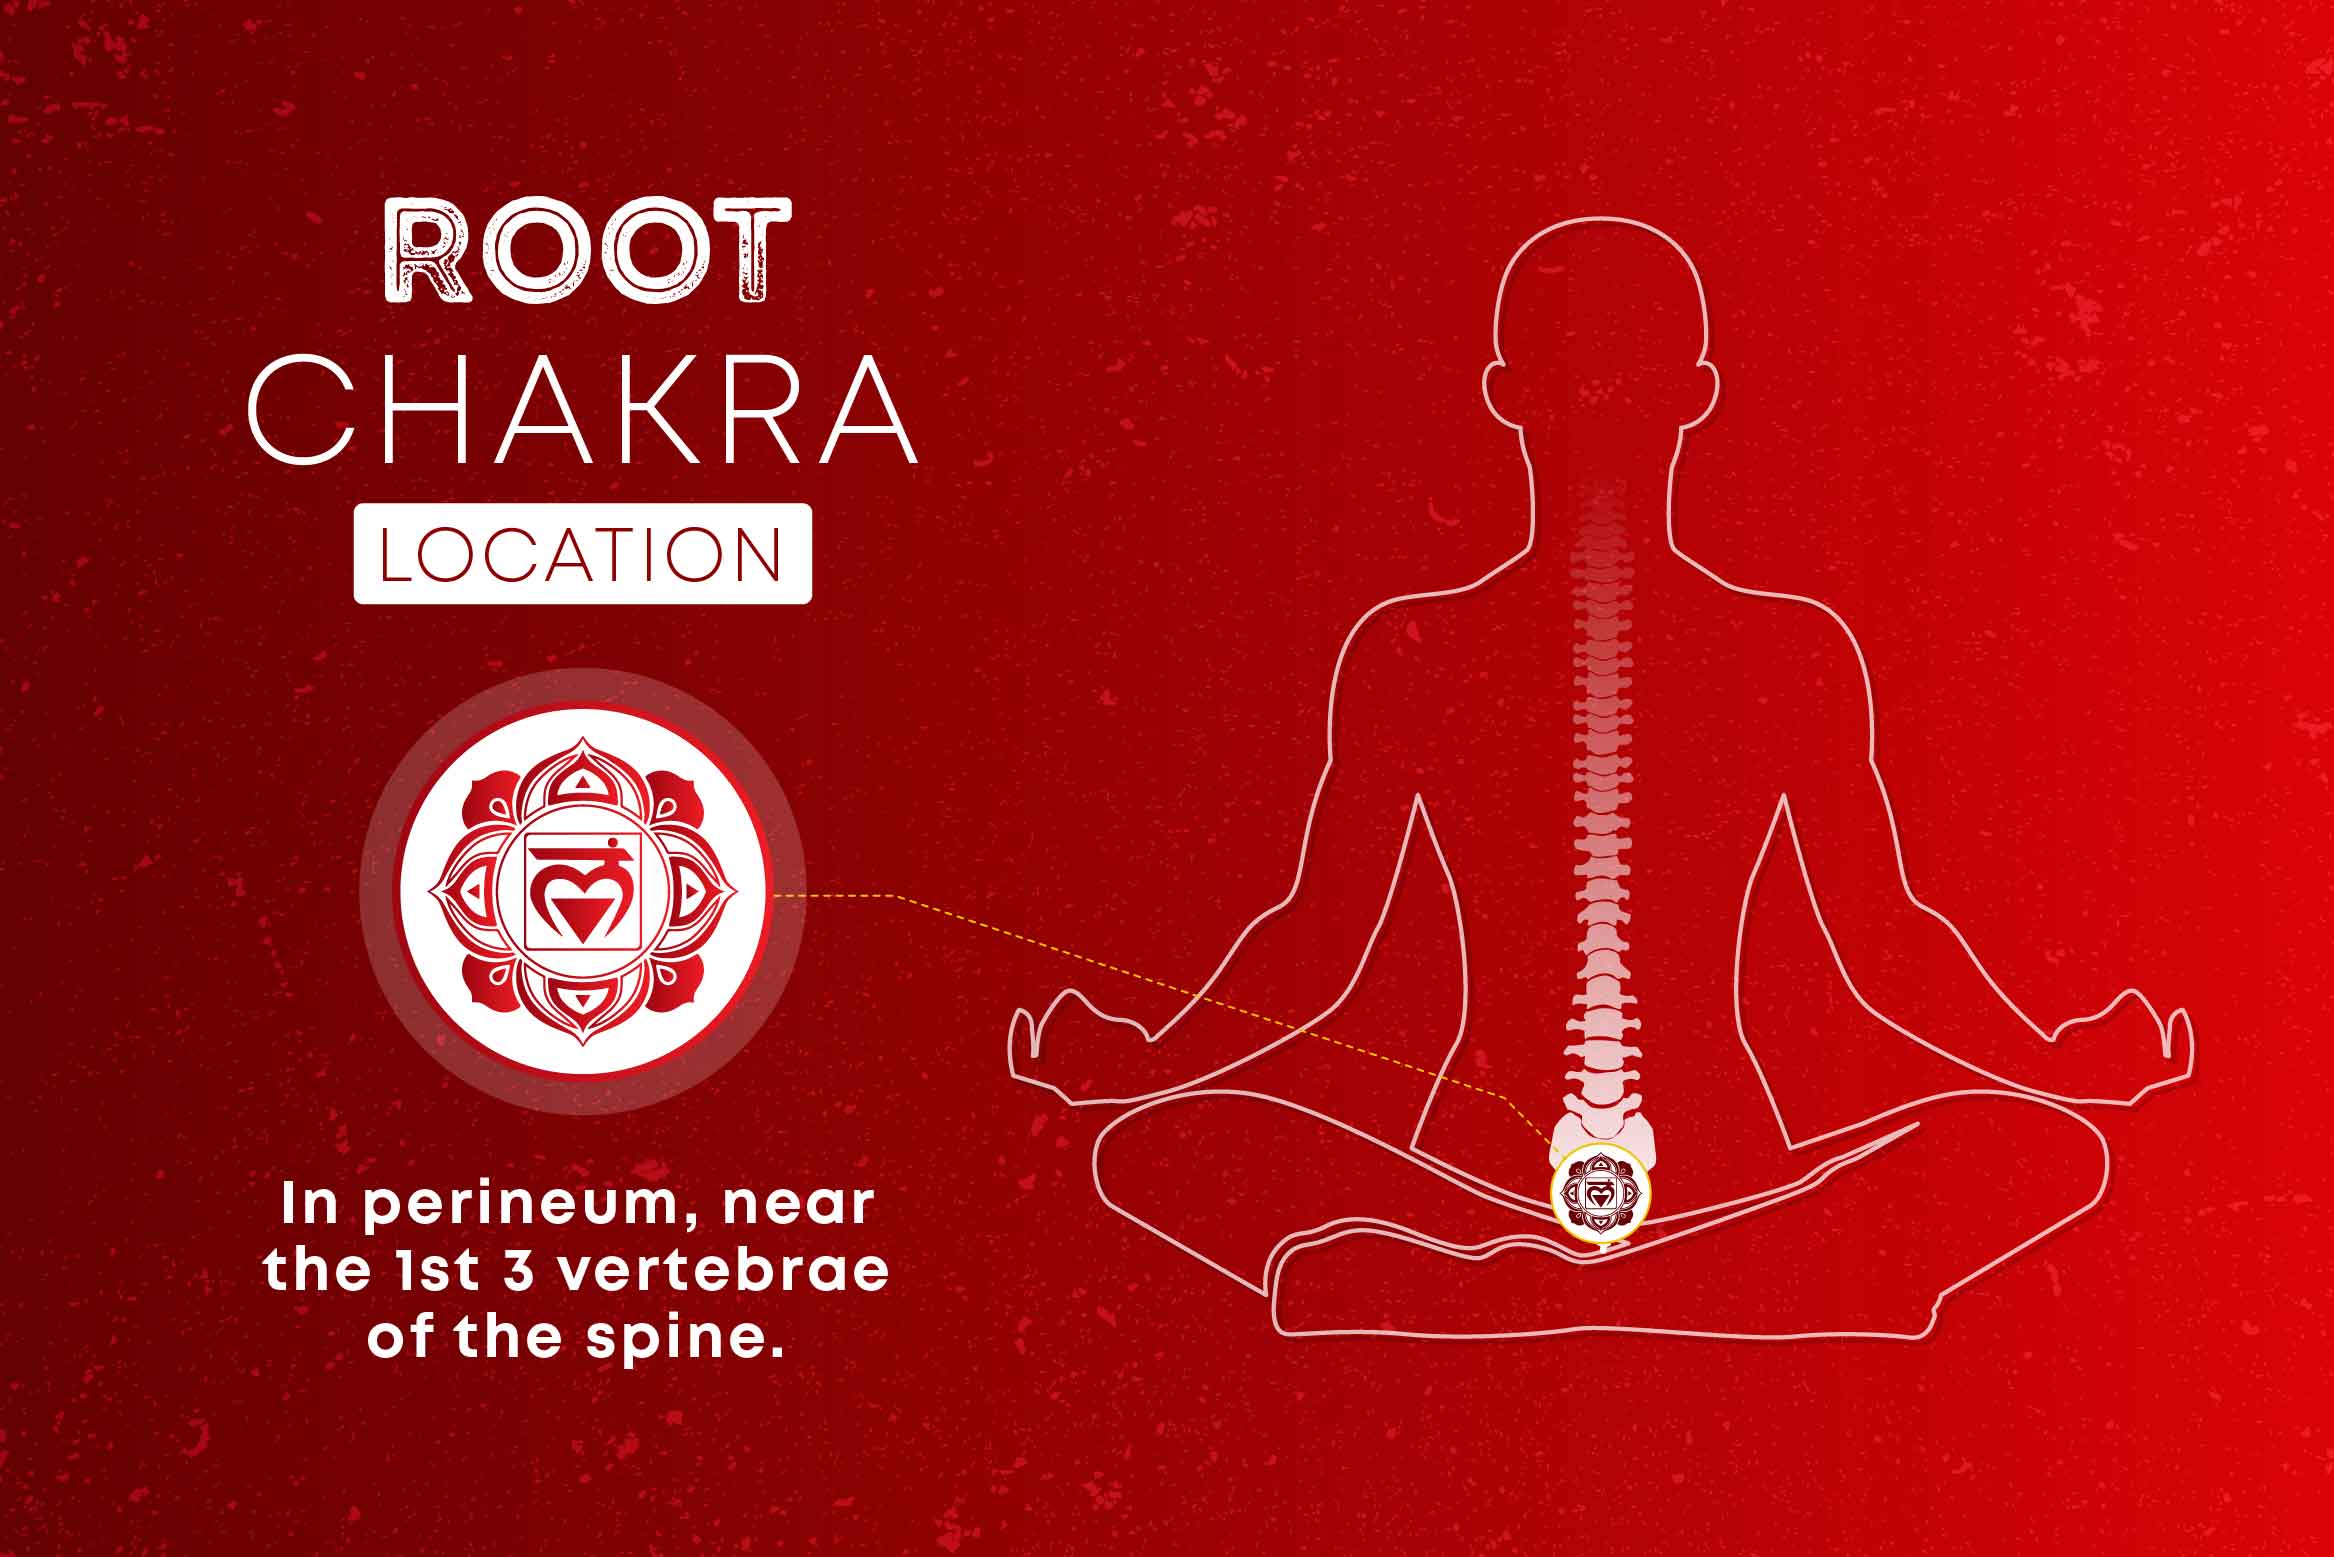 location of root chakra